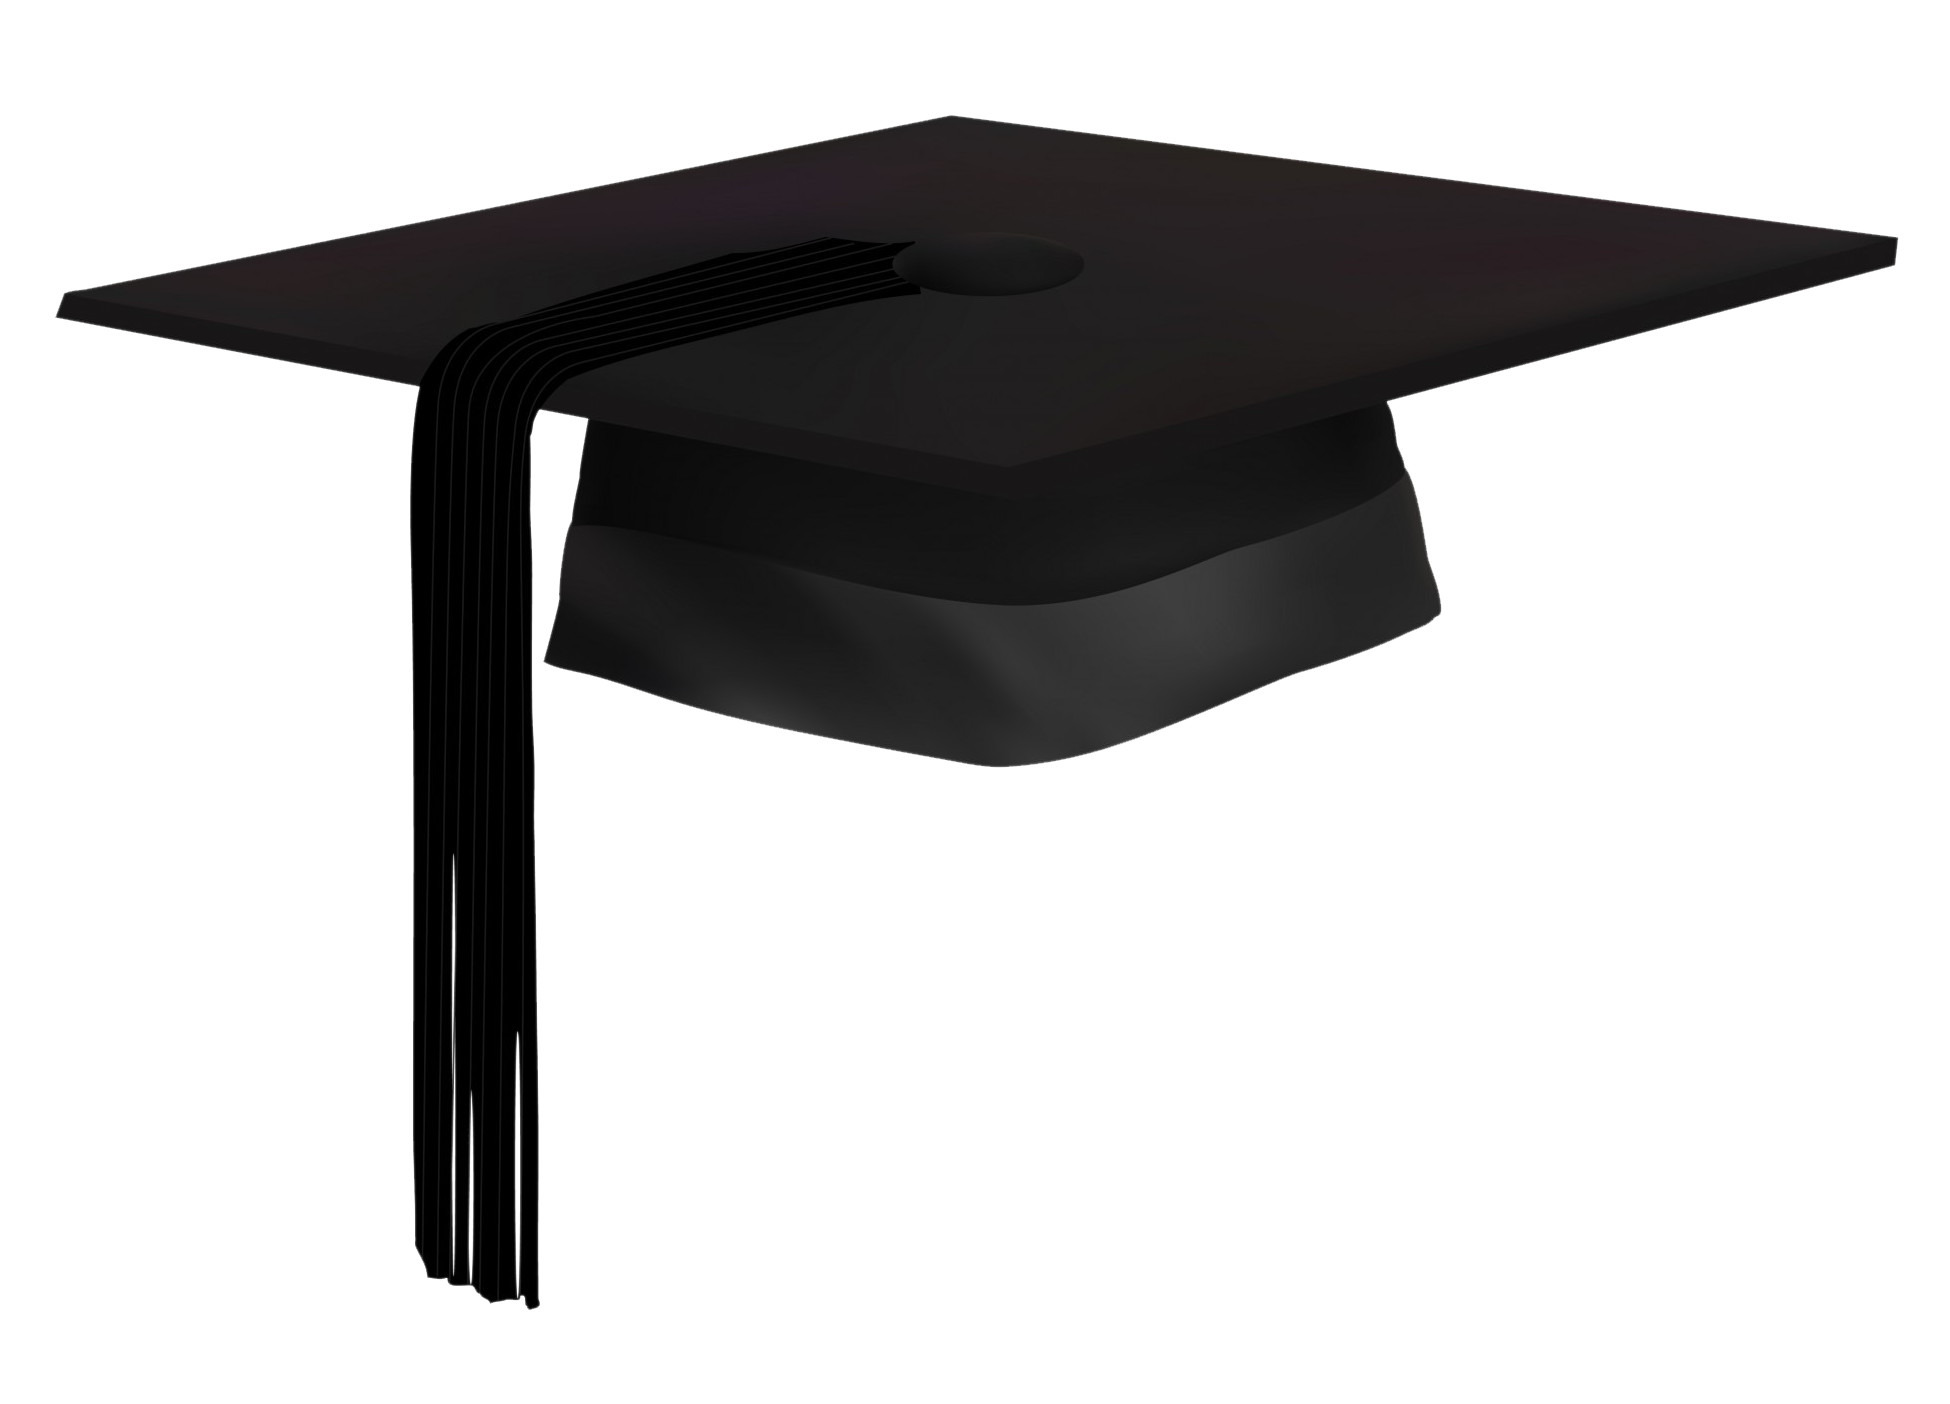 Bachelor graduate hat, SCHOOL